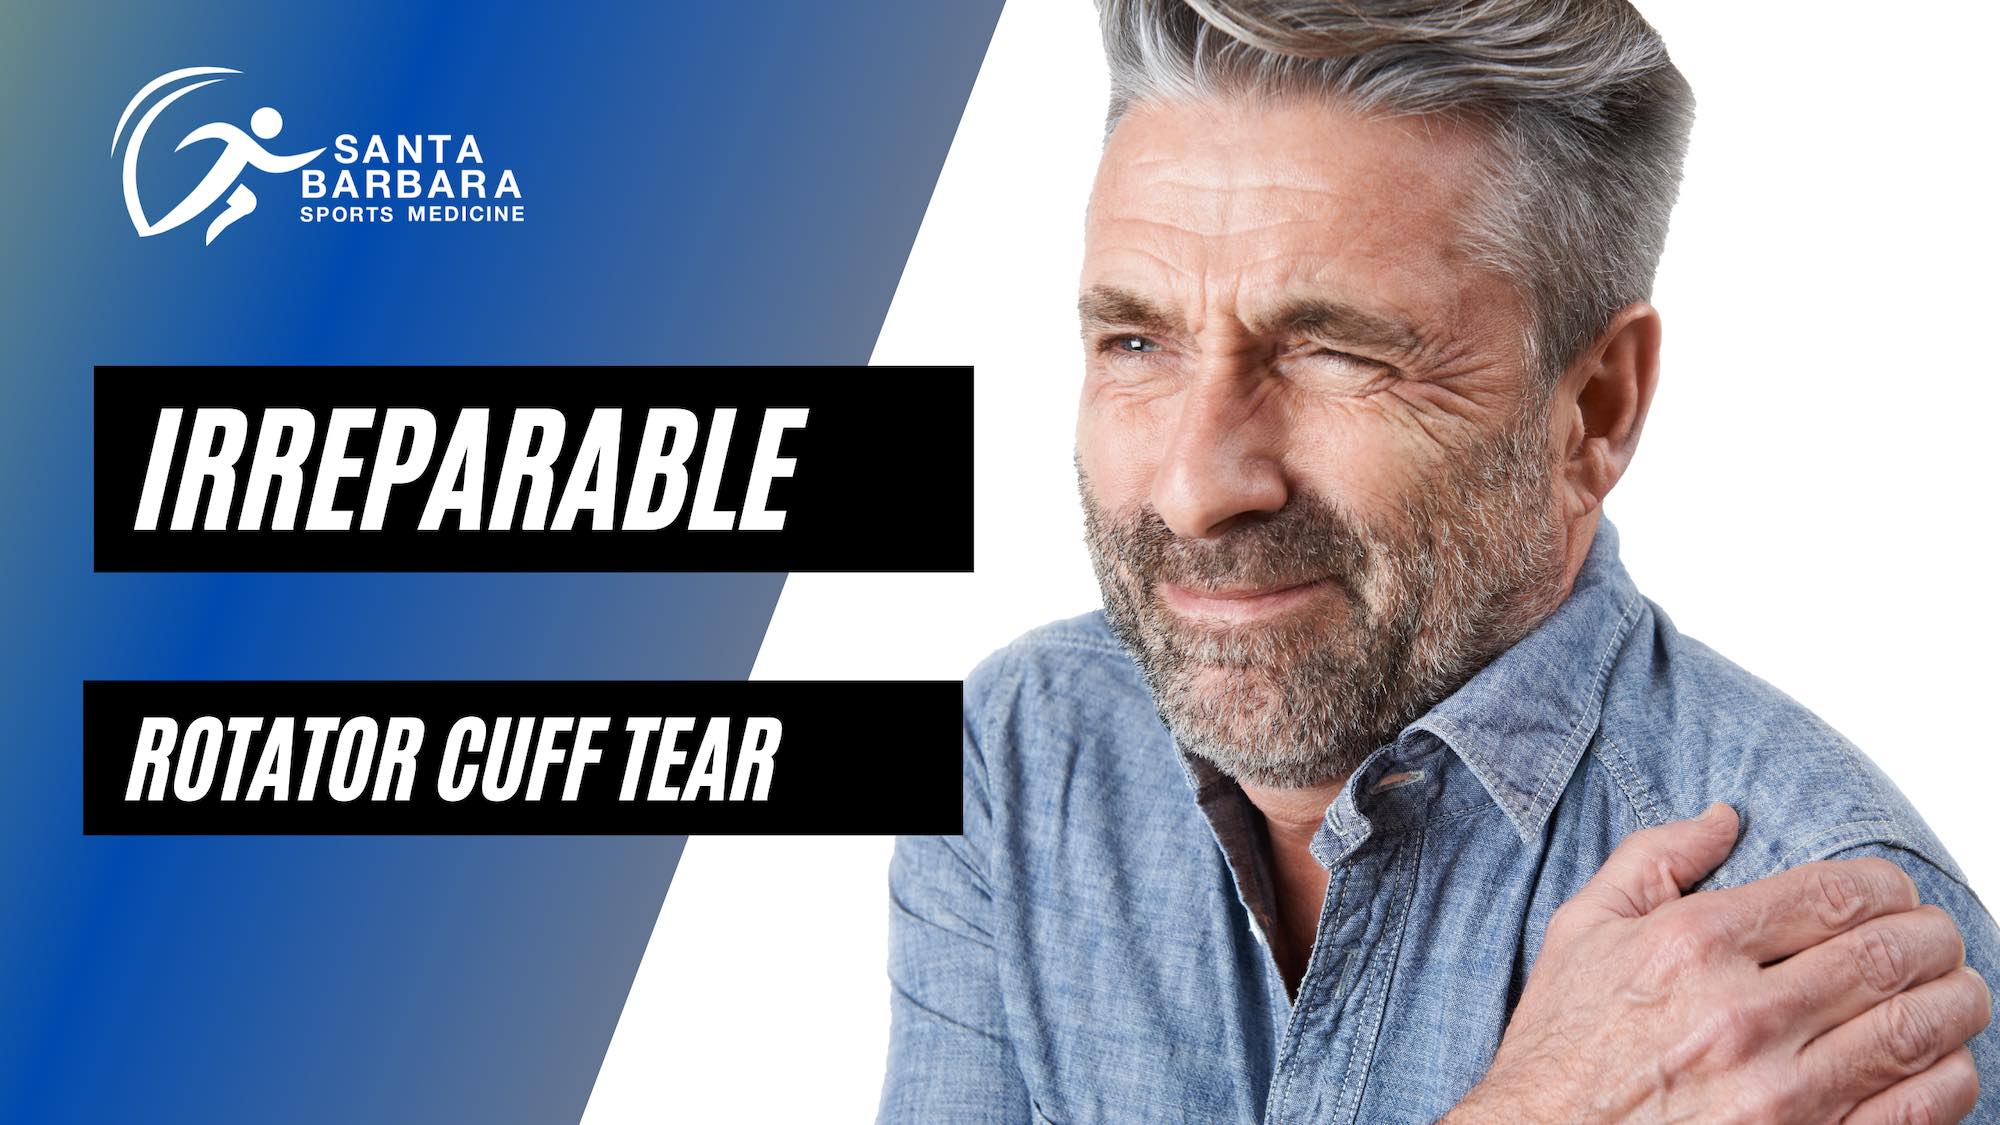 Irreparable rotator cuff tear treatment video